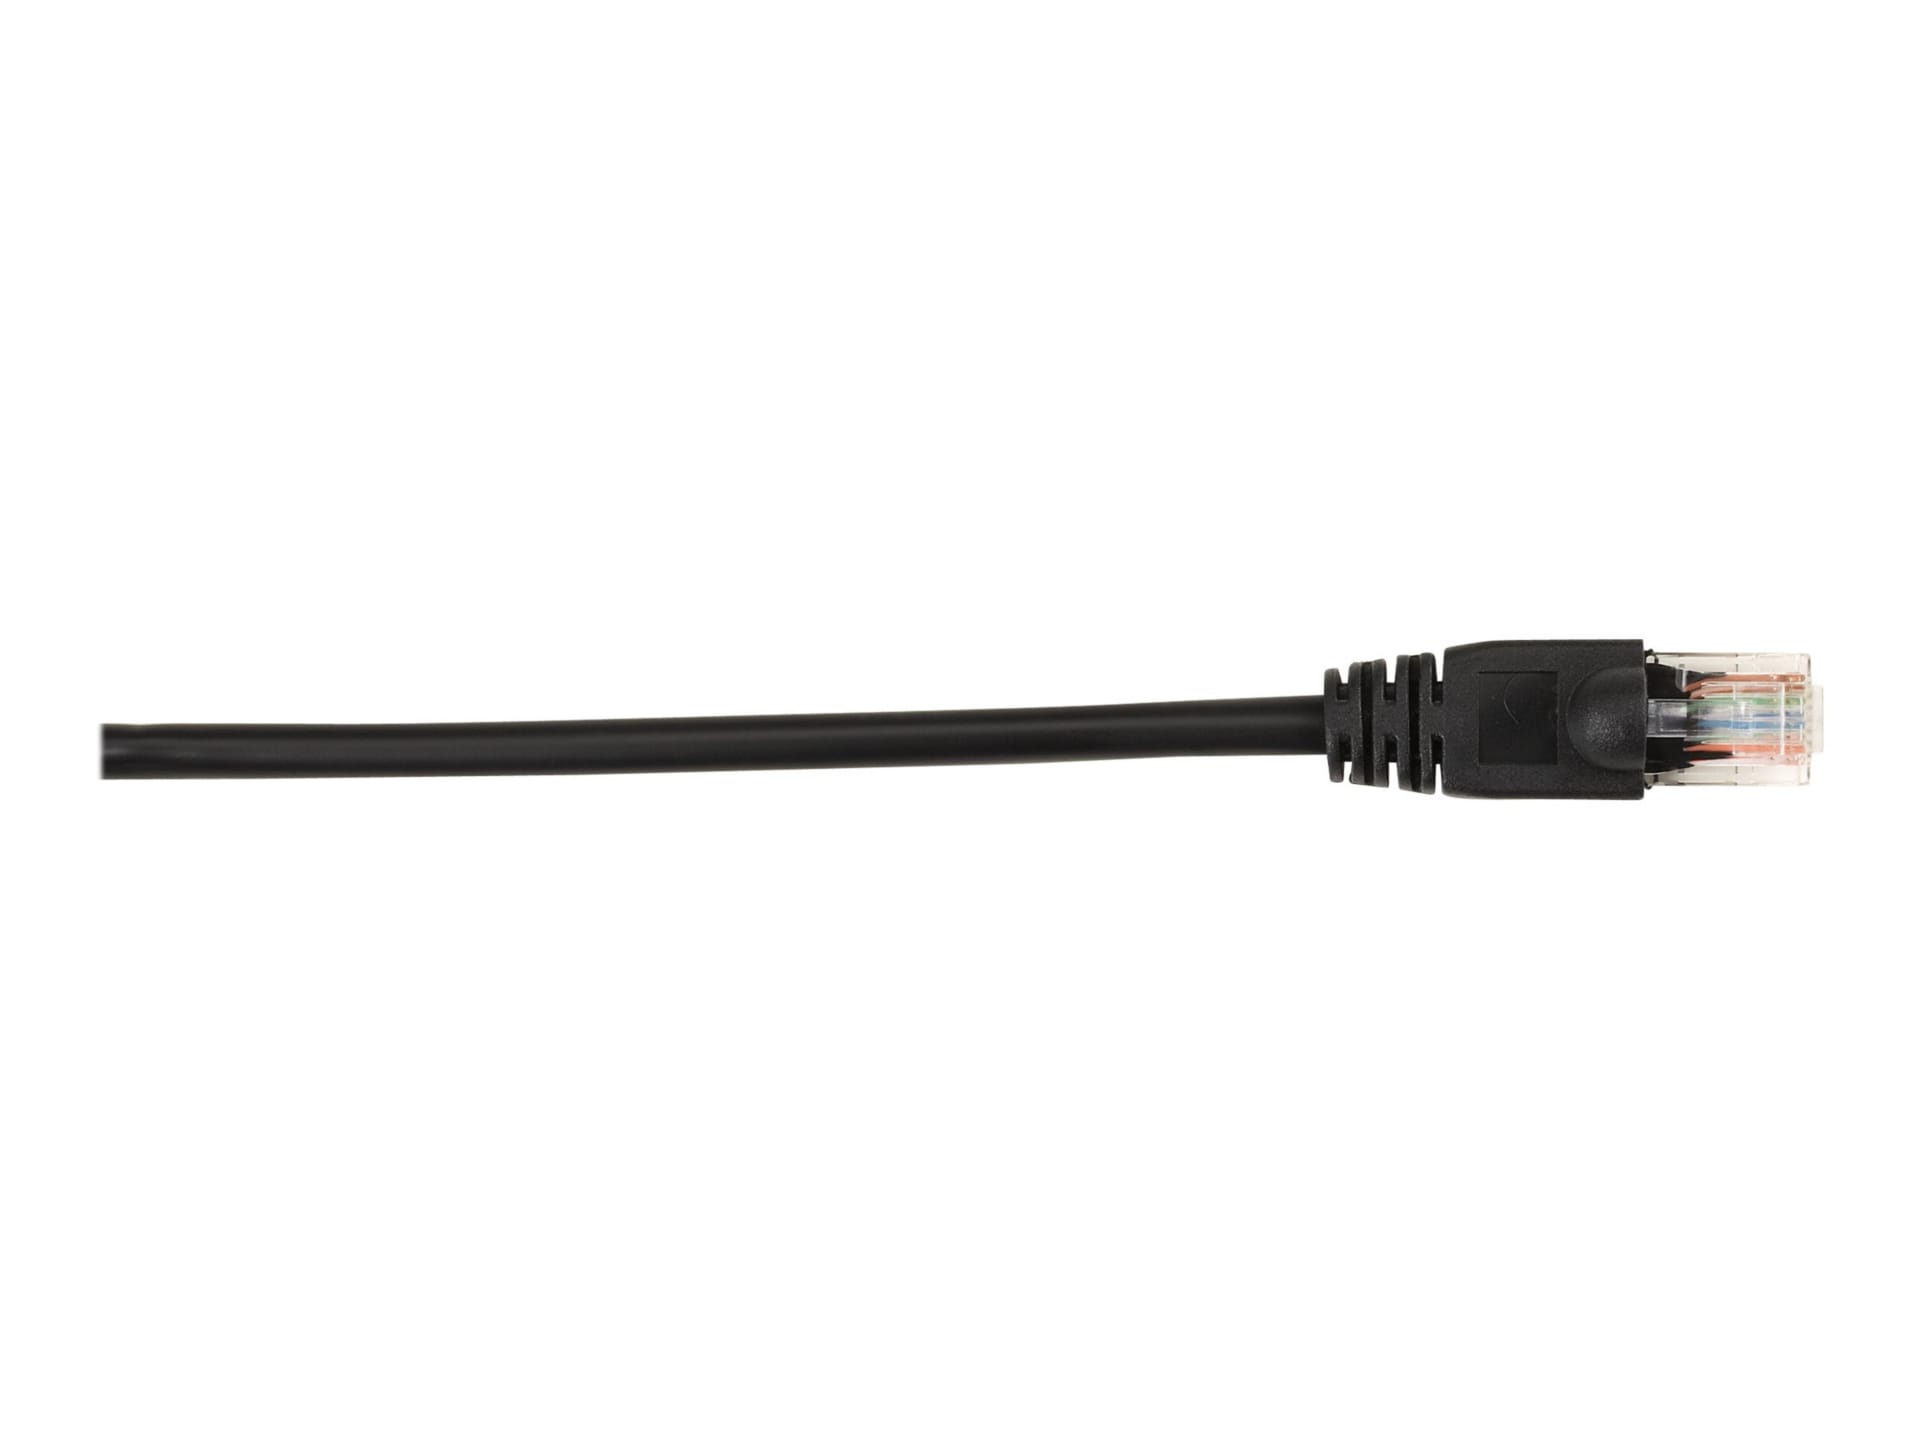 Black Box patch cable - 10 ft - black